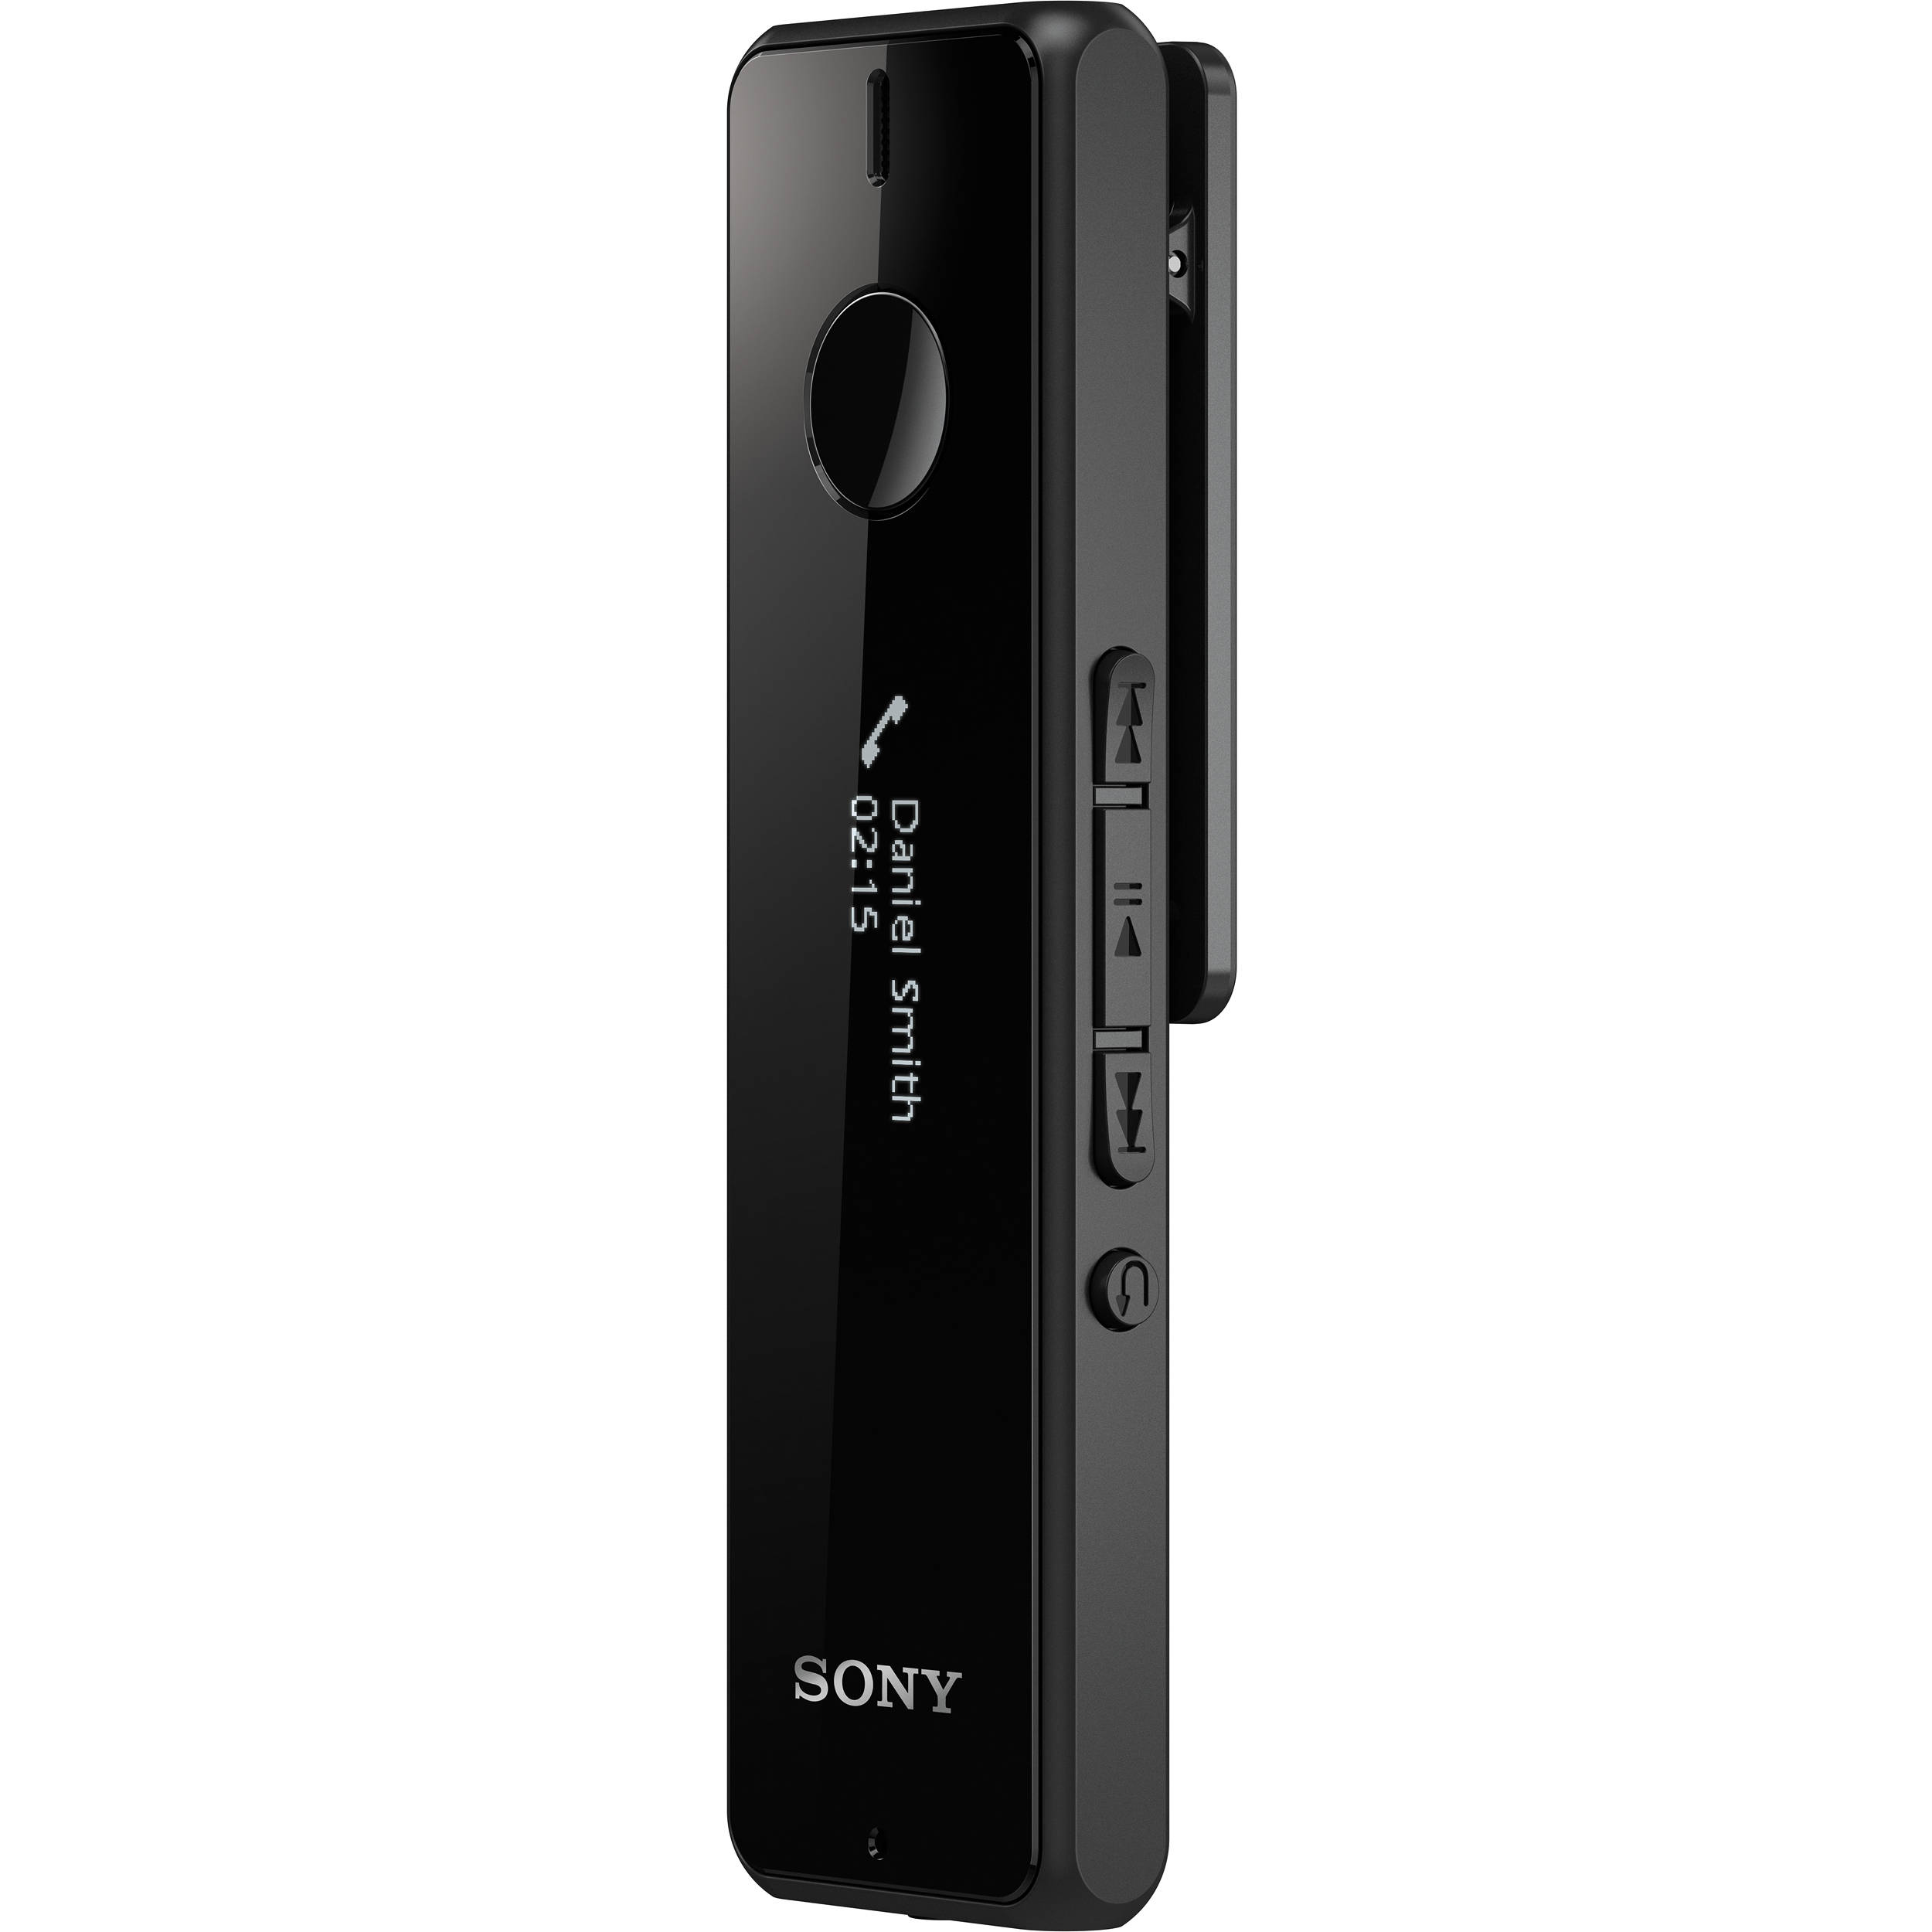 Sony Smart Bluetooth Handset Sbh52 Black 1276 3318 B H Photo